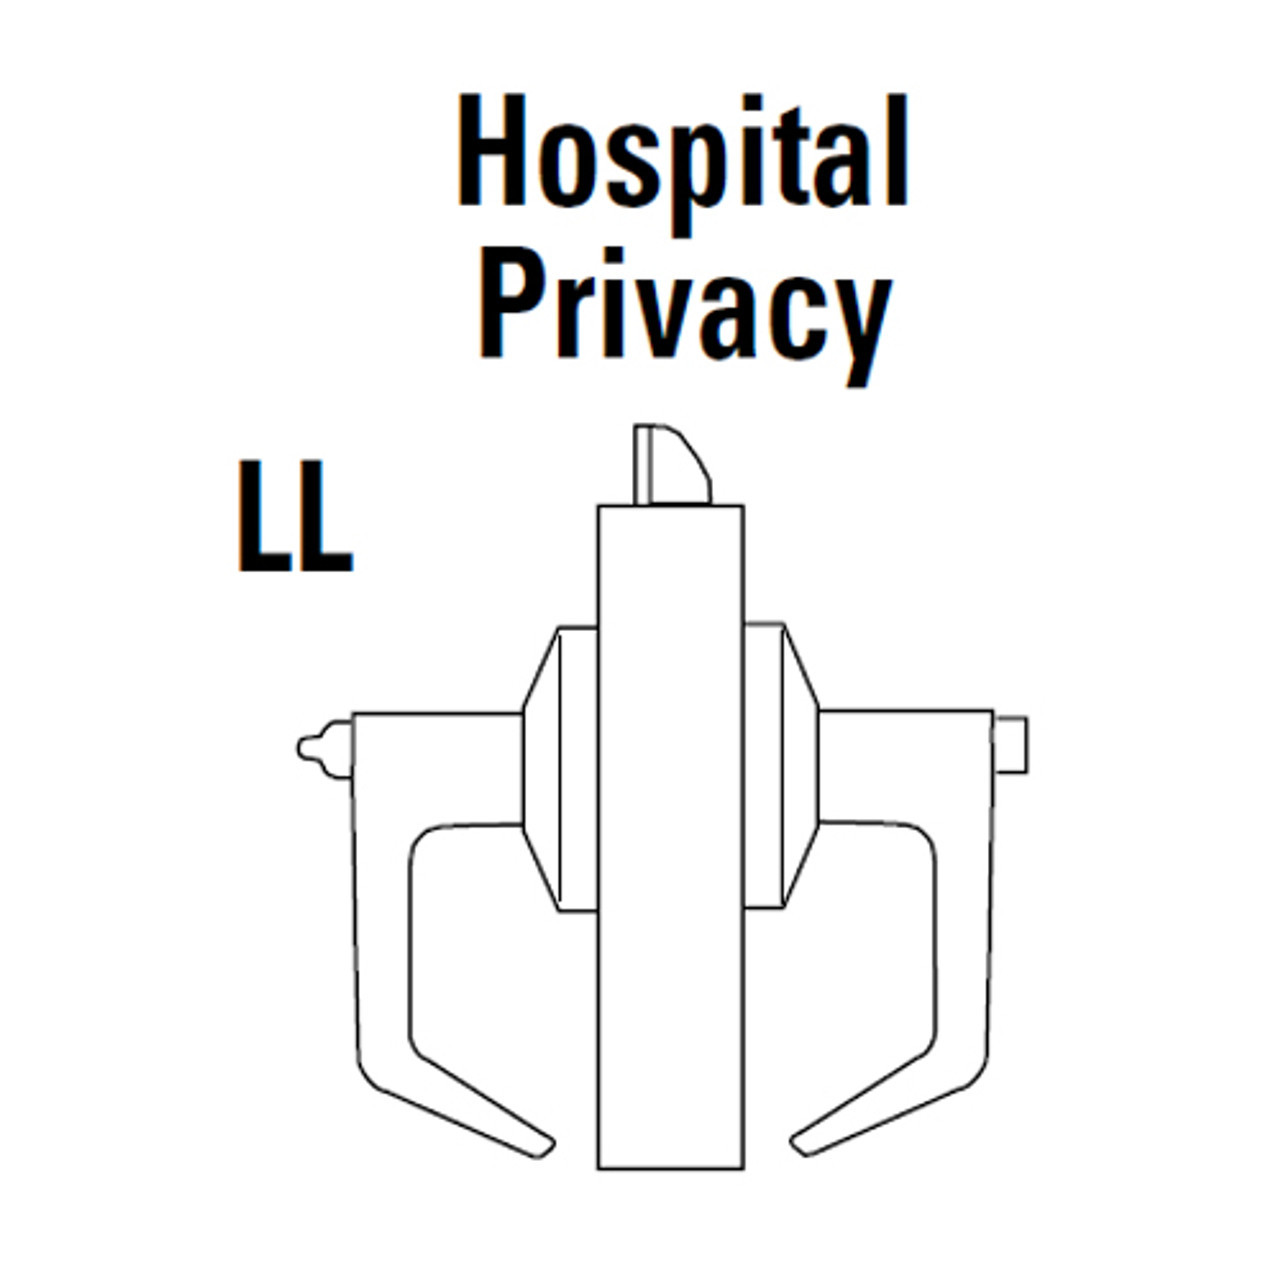 9K30LL14DSTK690LM Best 9K Series Hospital Privacy Heavy Duty Cylindrical Lever Locks in Dark Bronze